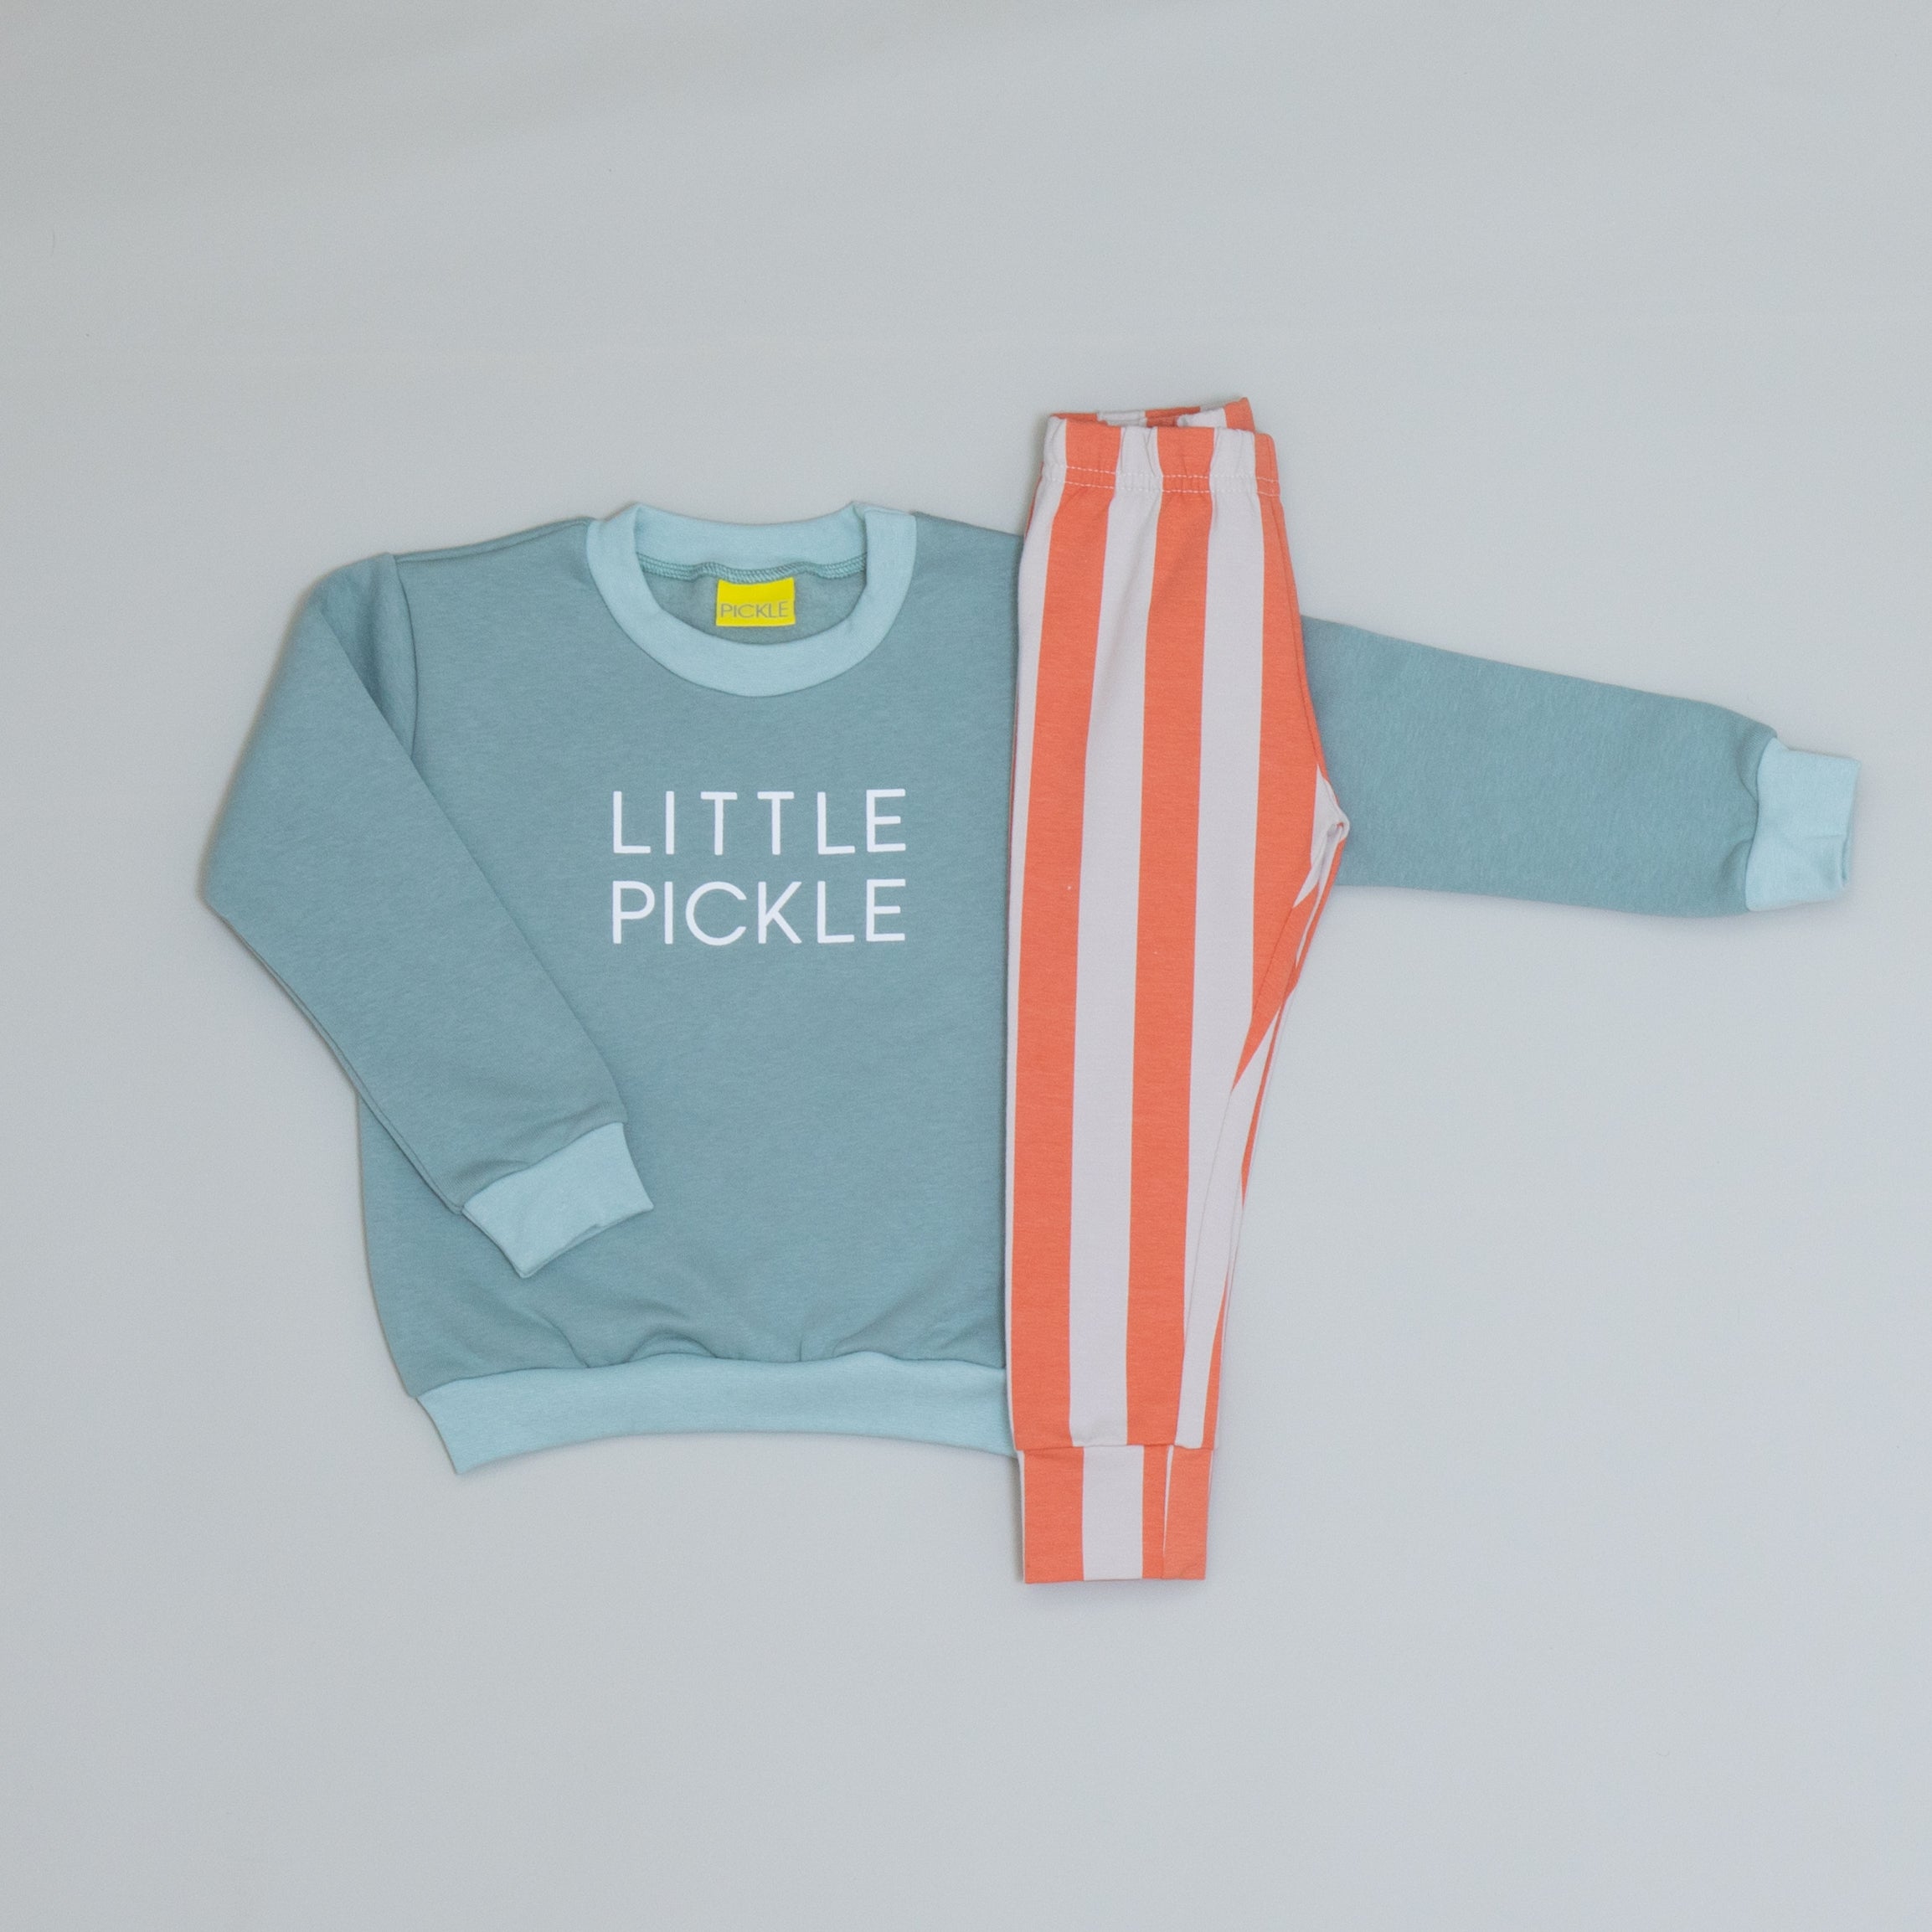 Pickle | Little Pickle Sweater - Sage - Moo Like a Monkey